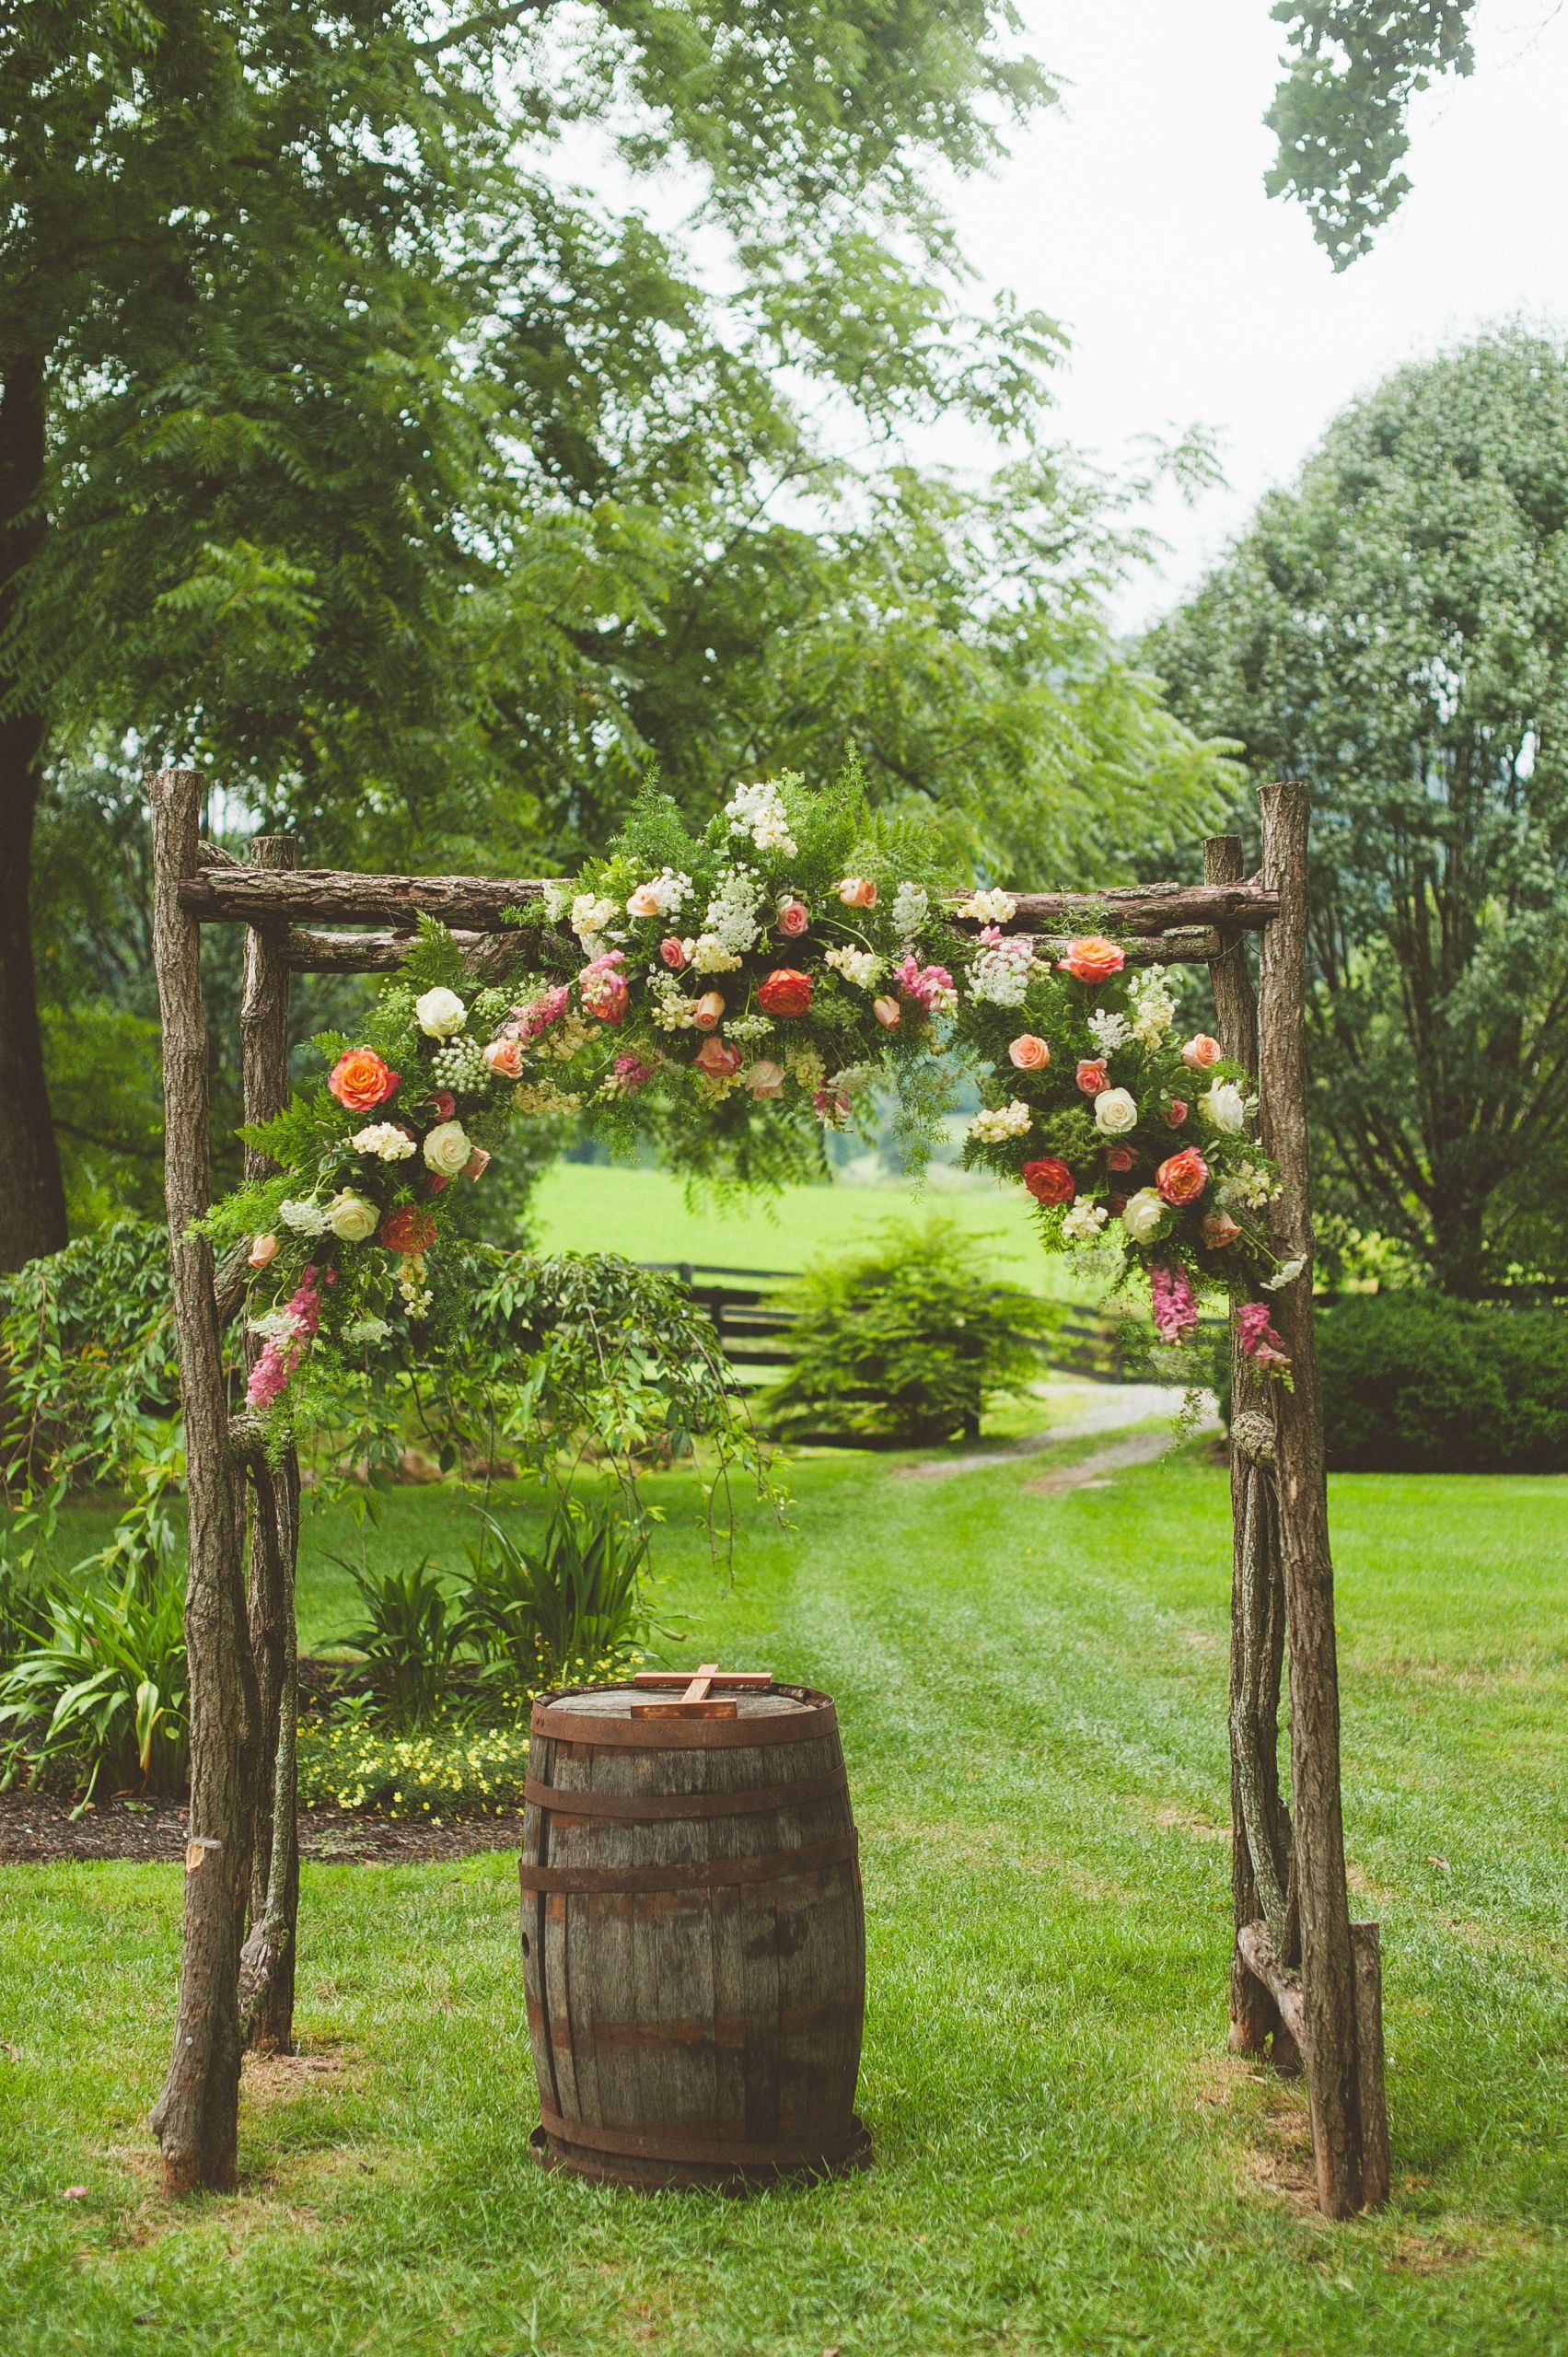 DIY Wedding Arch Wood
 Wooden Wedding Arch With Coral Flowers